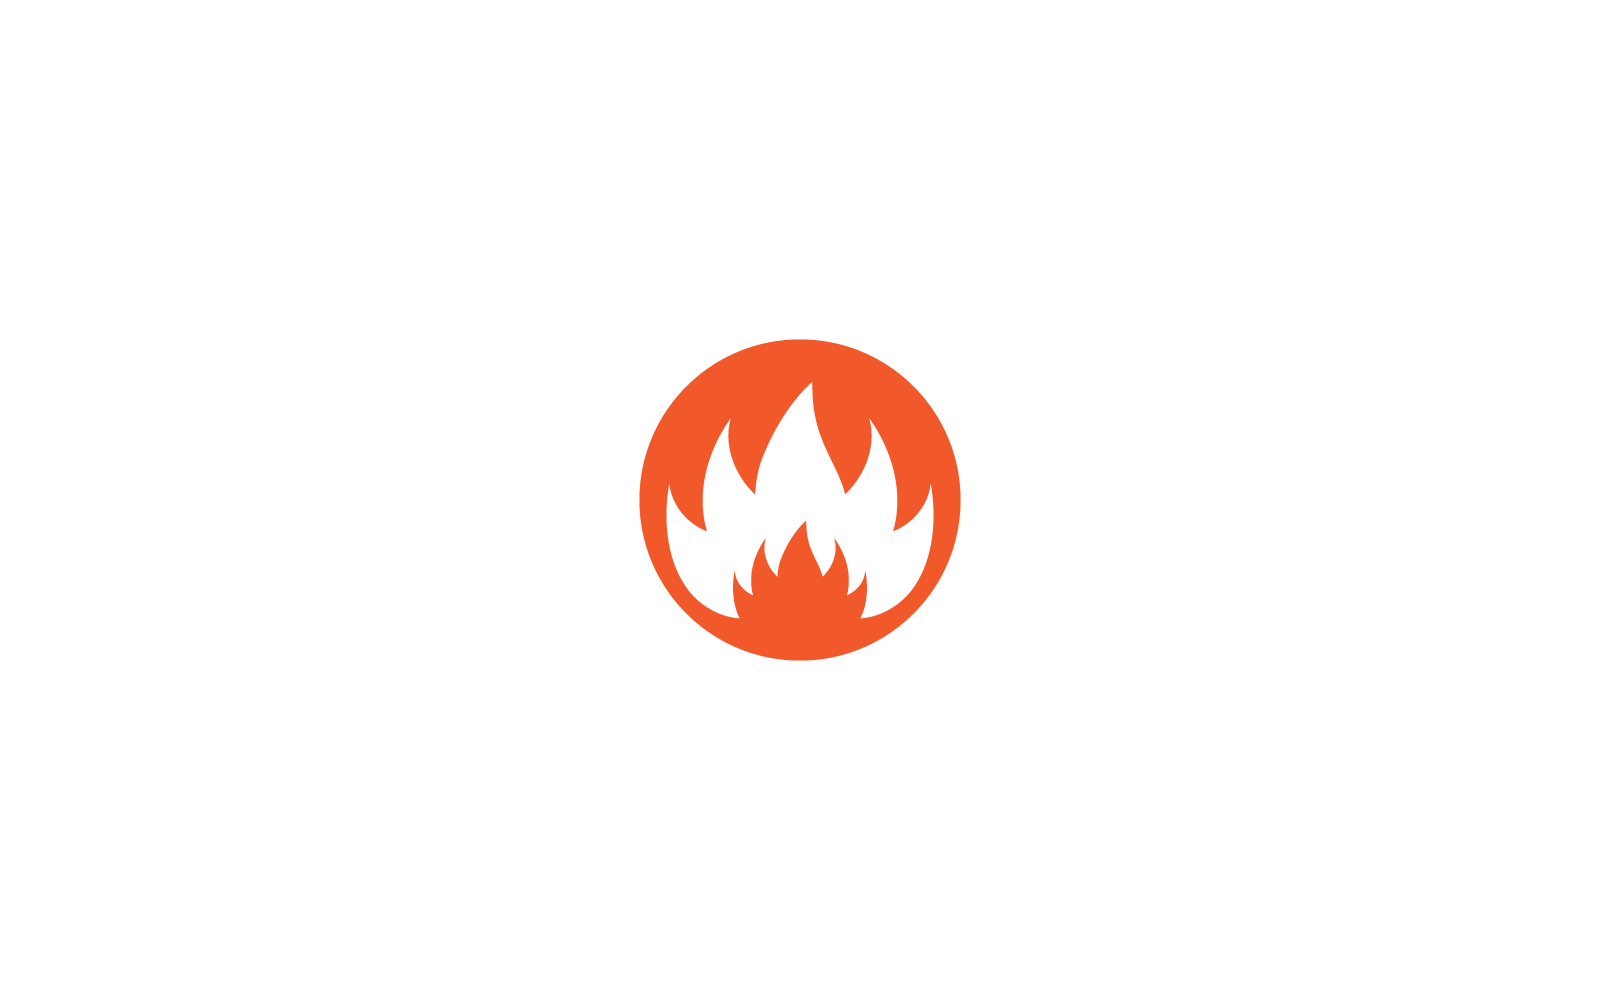 Fire flame illusration Template vector